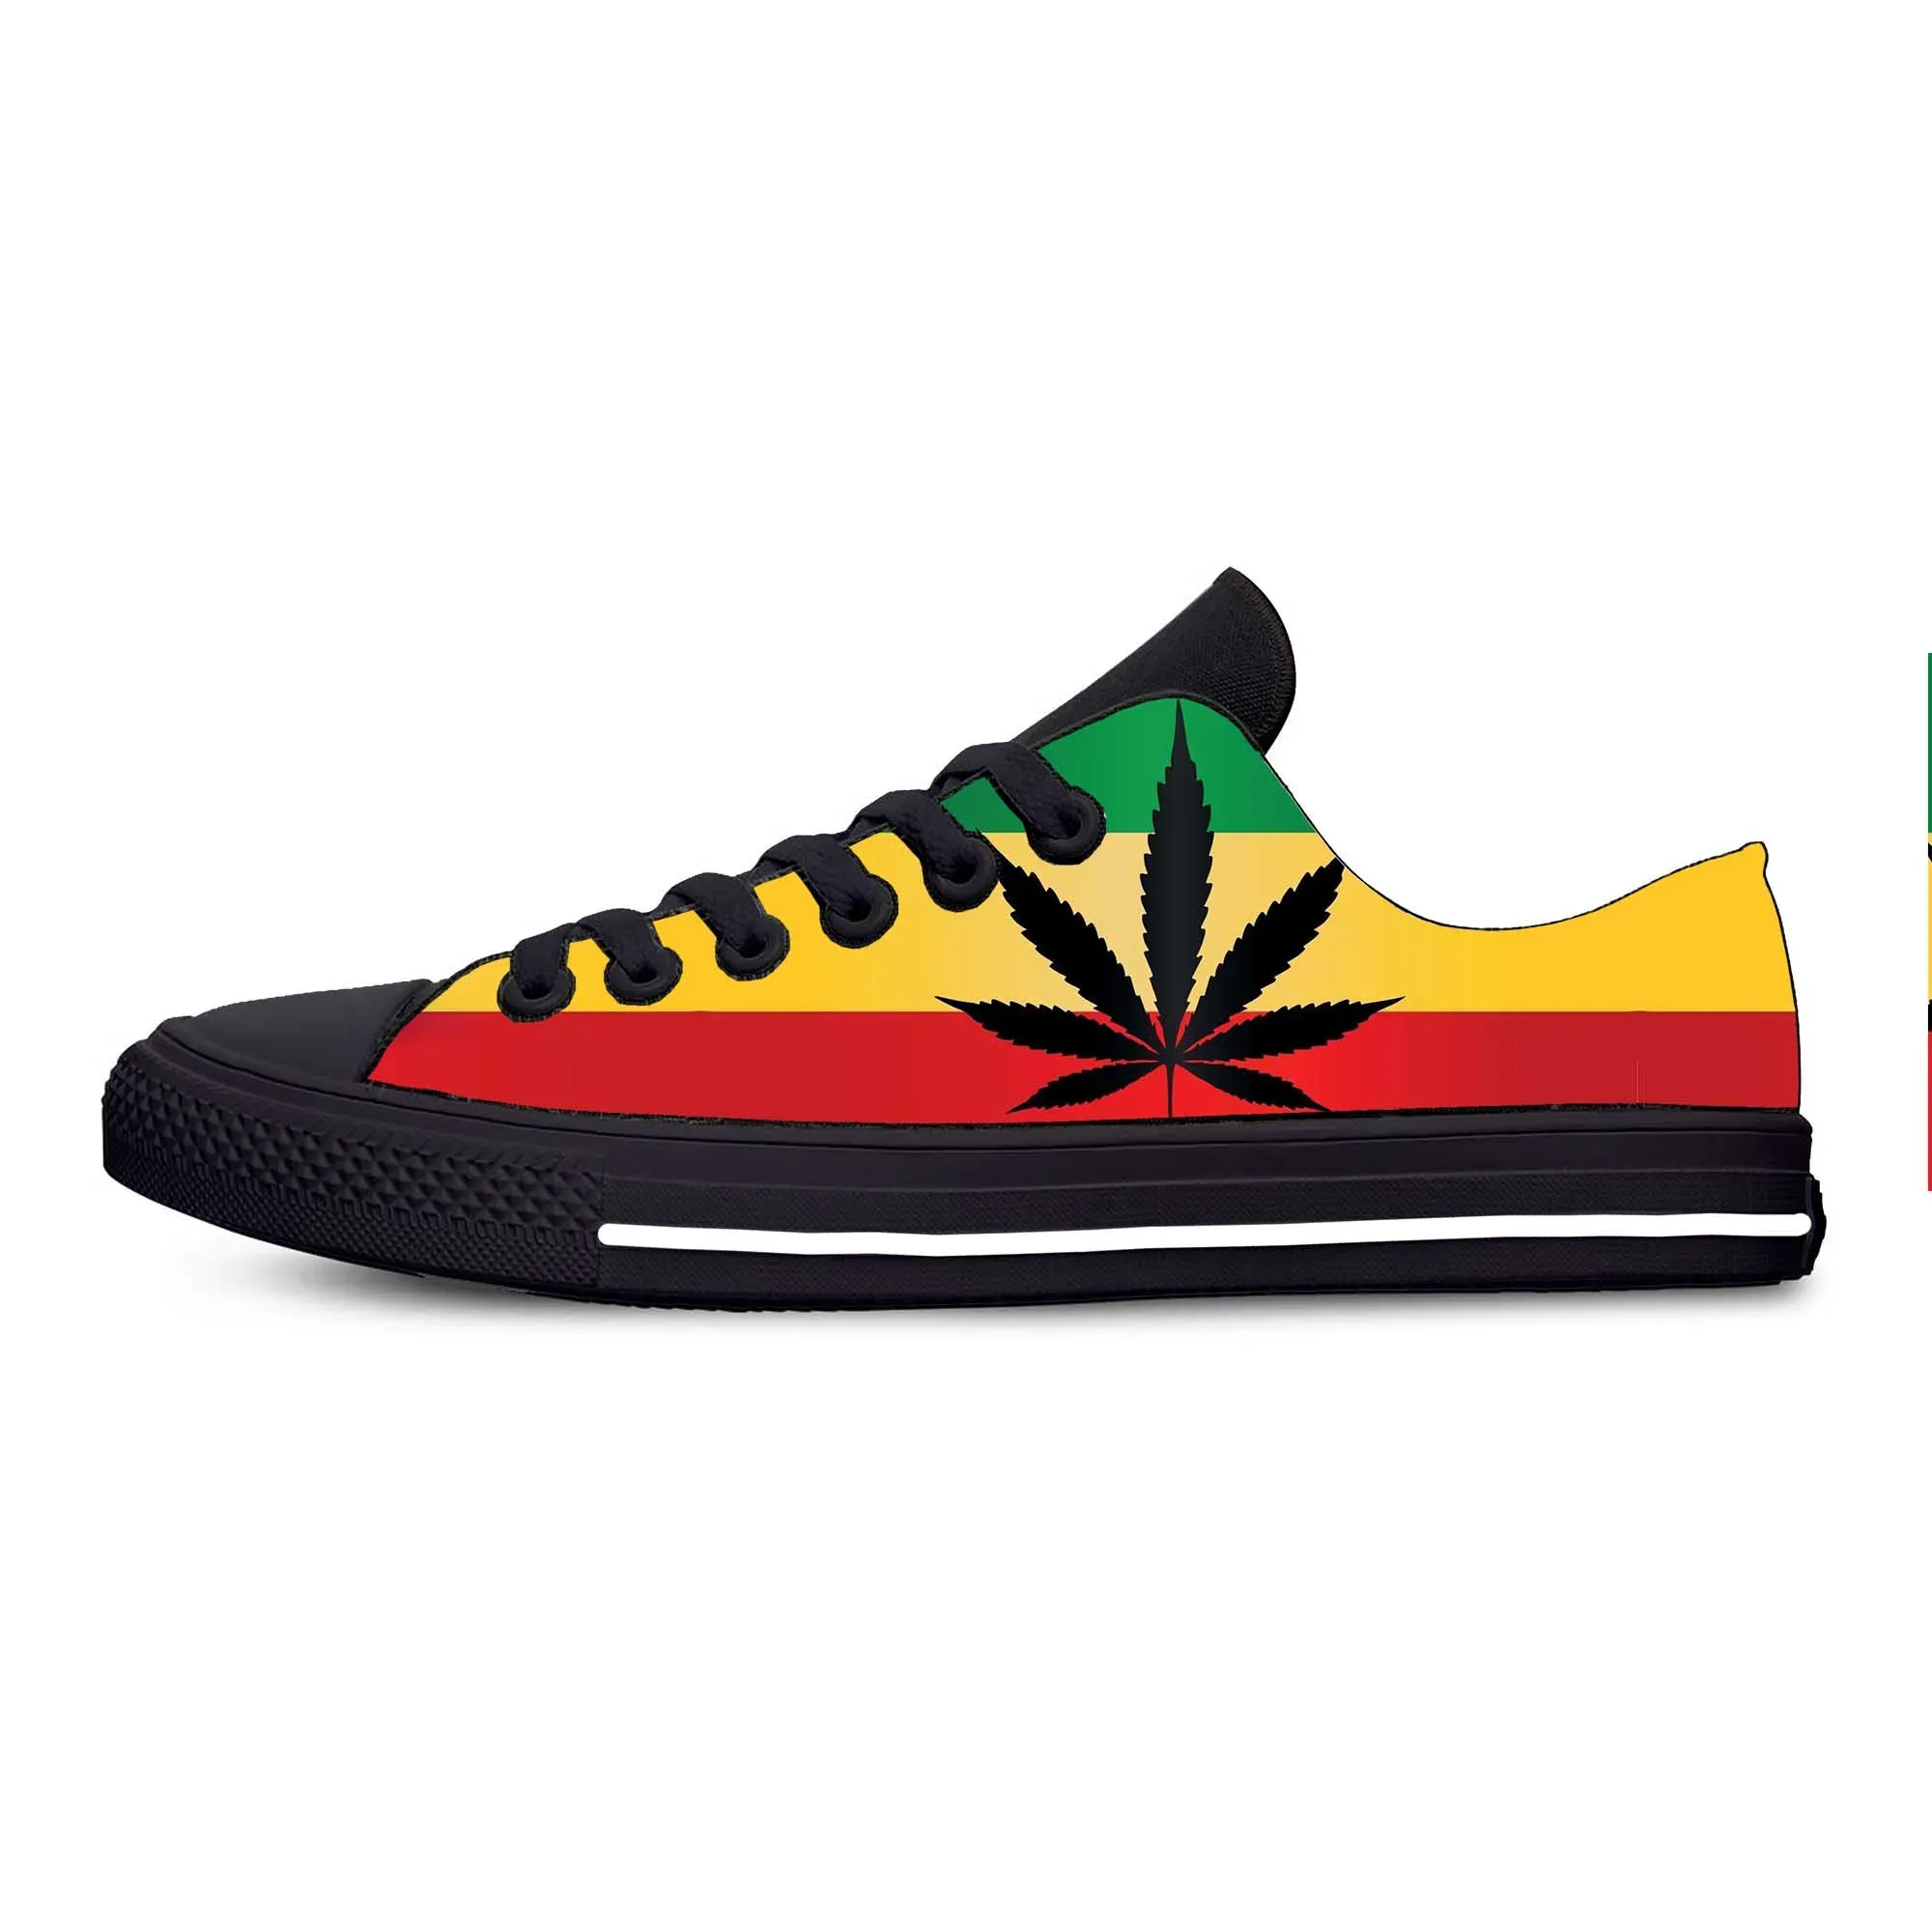 Shoes Reggae Rasta Leaf Weed Flag Rastafari Rastafarian Casual Cloth Shoes Low Top Comfortable Breathable 3D Print Men Women Sneakers